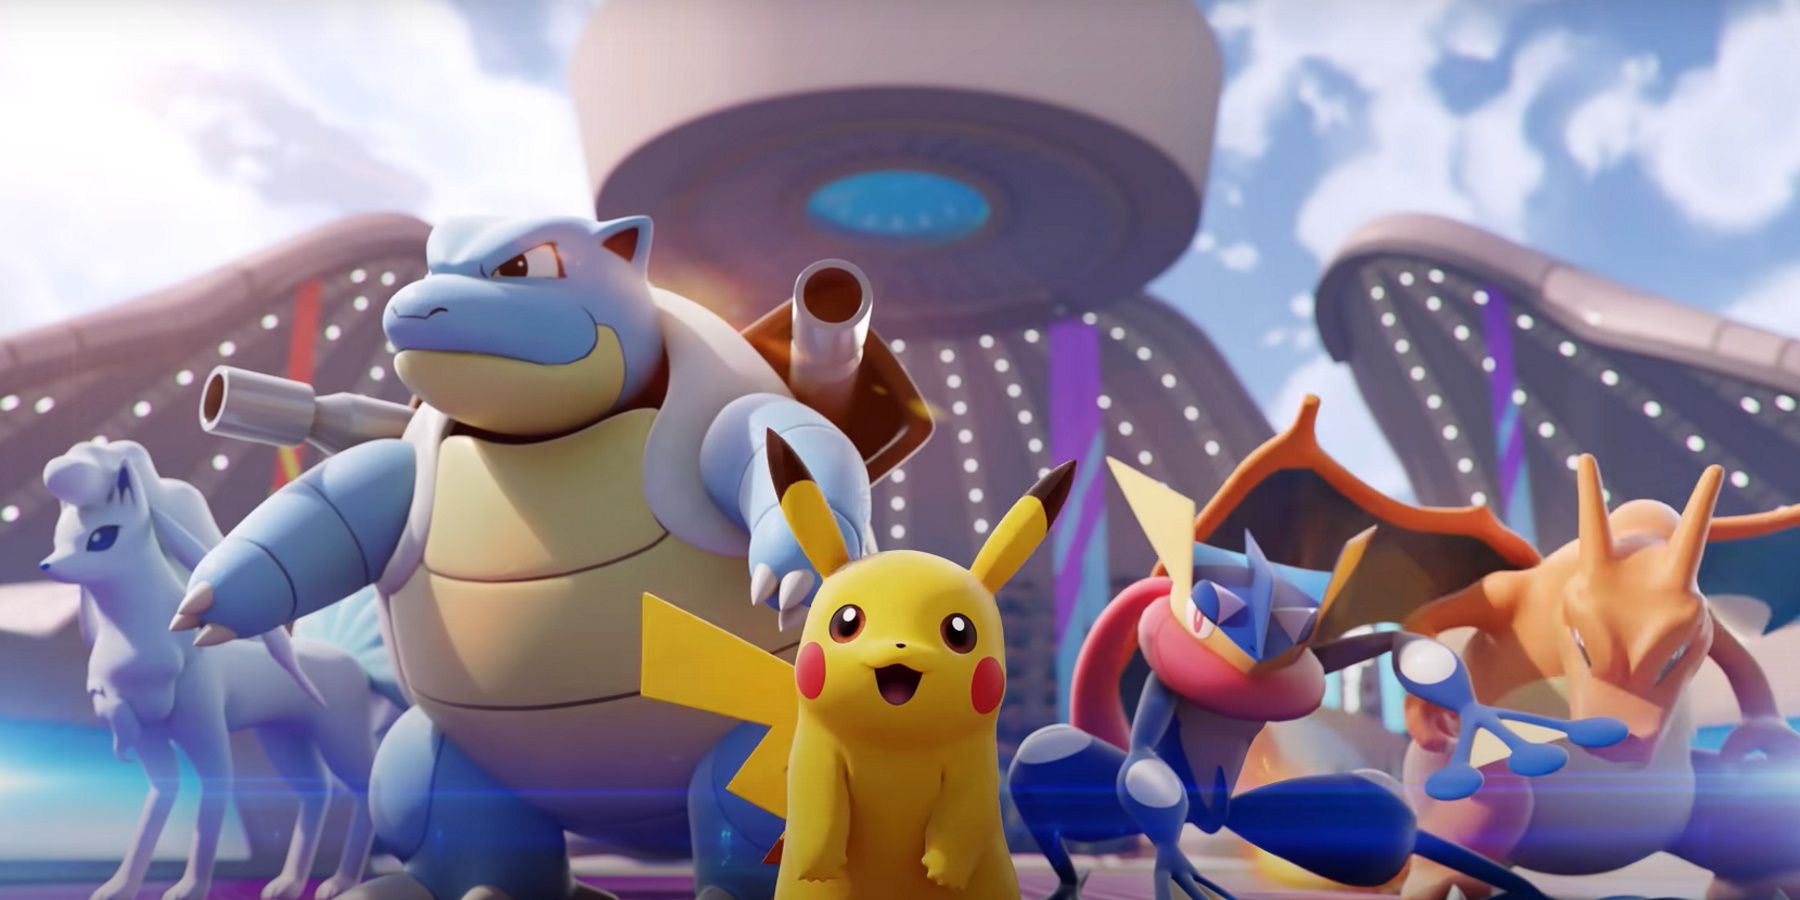 Pokemon Unite pikachu blastoise ninetails greninja charizard team